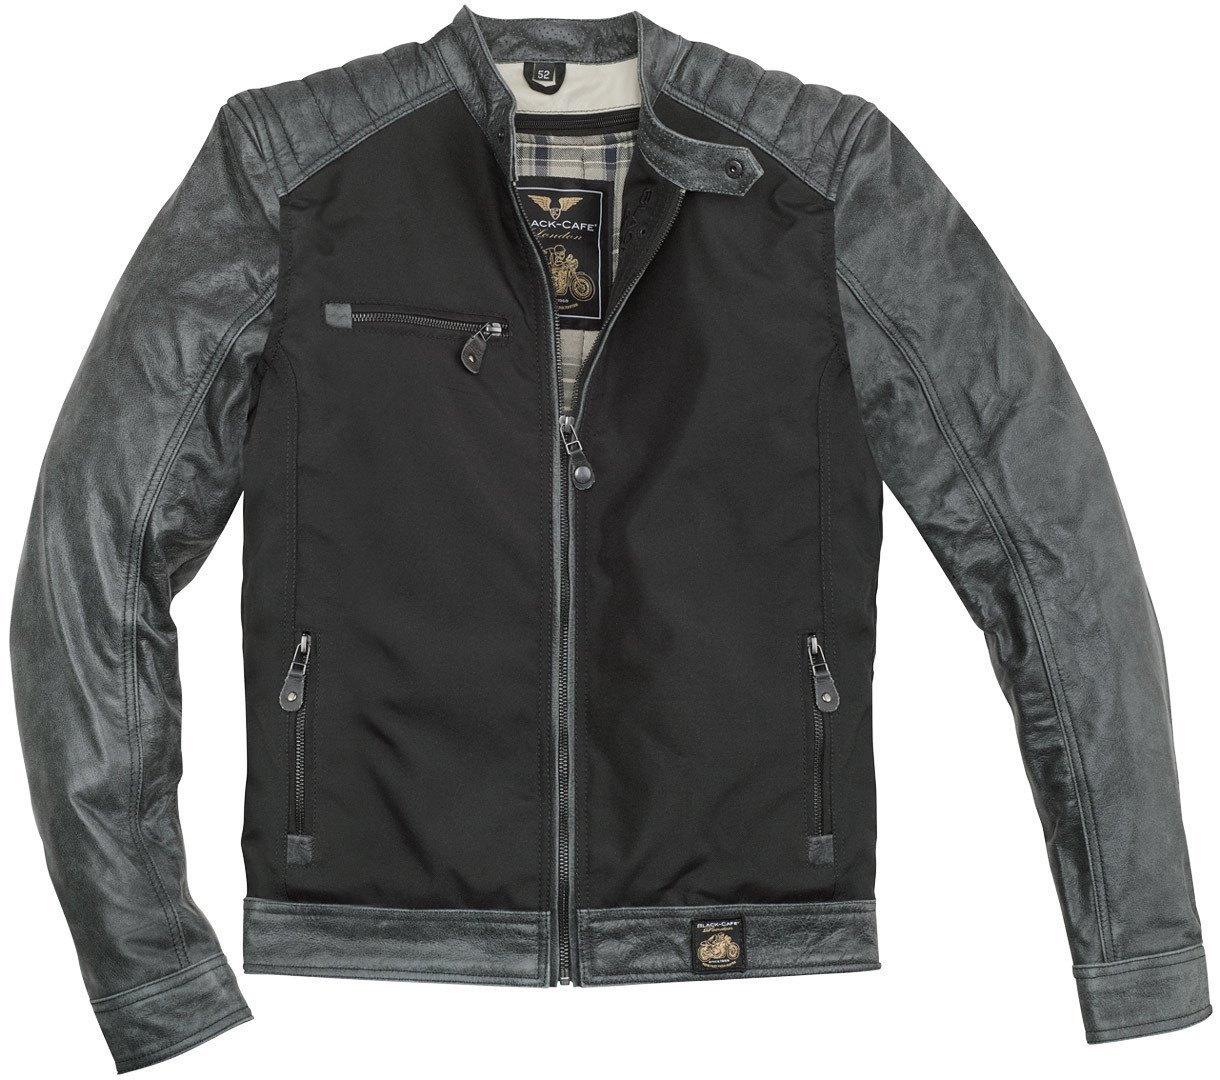 Black-Cafe London Johannesburg Motorrad Leder- / Textiljacke, schwarz-grau, Größe 52